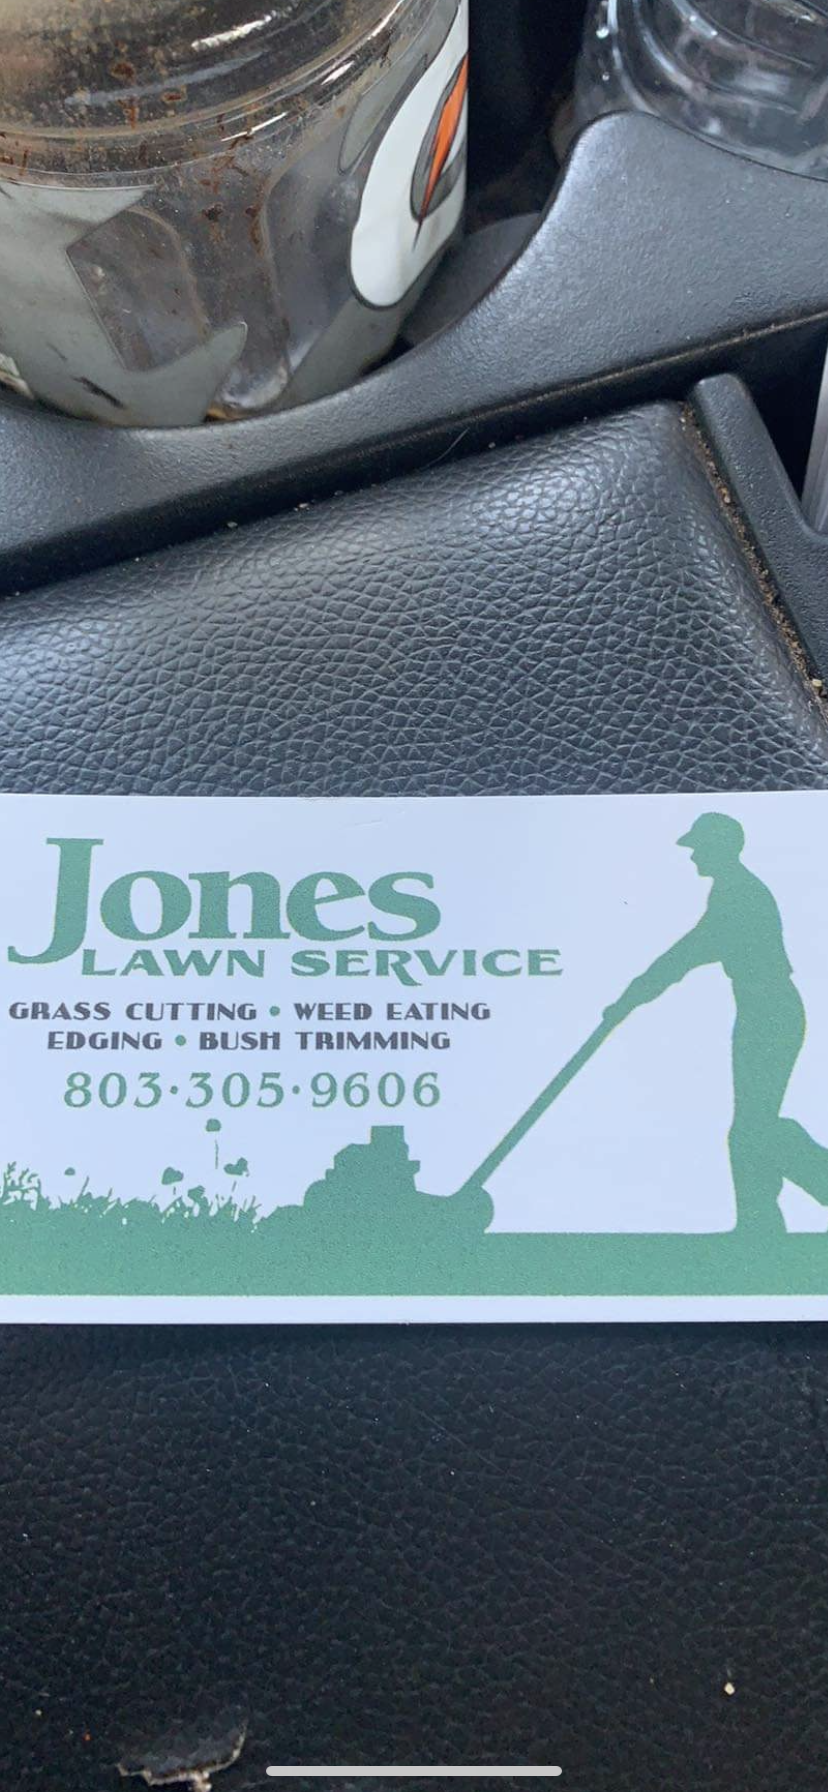 Jones lawn service